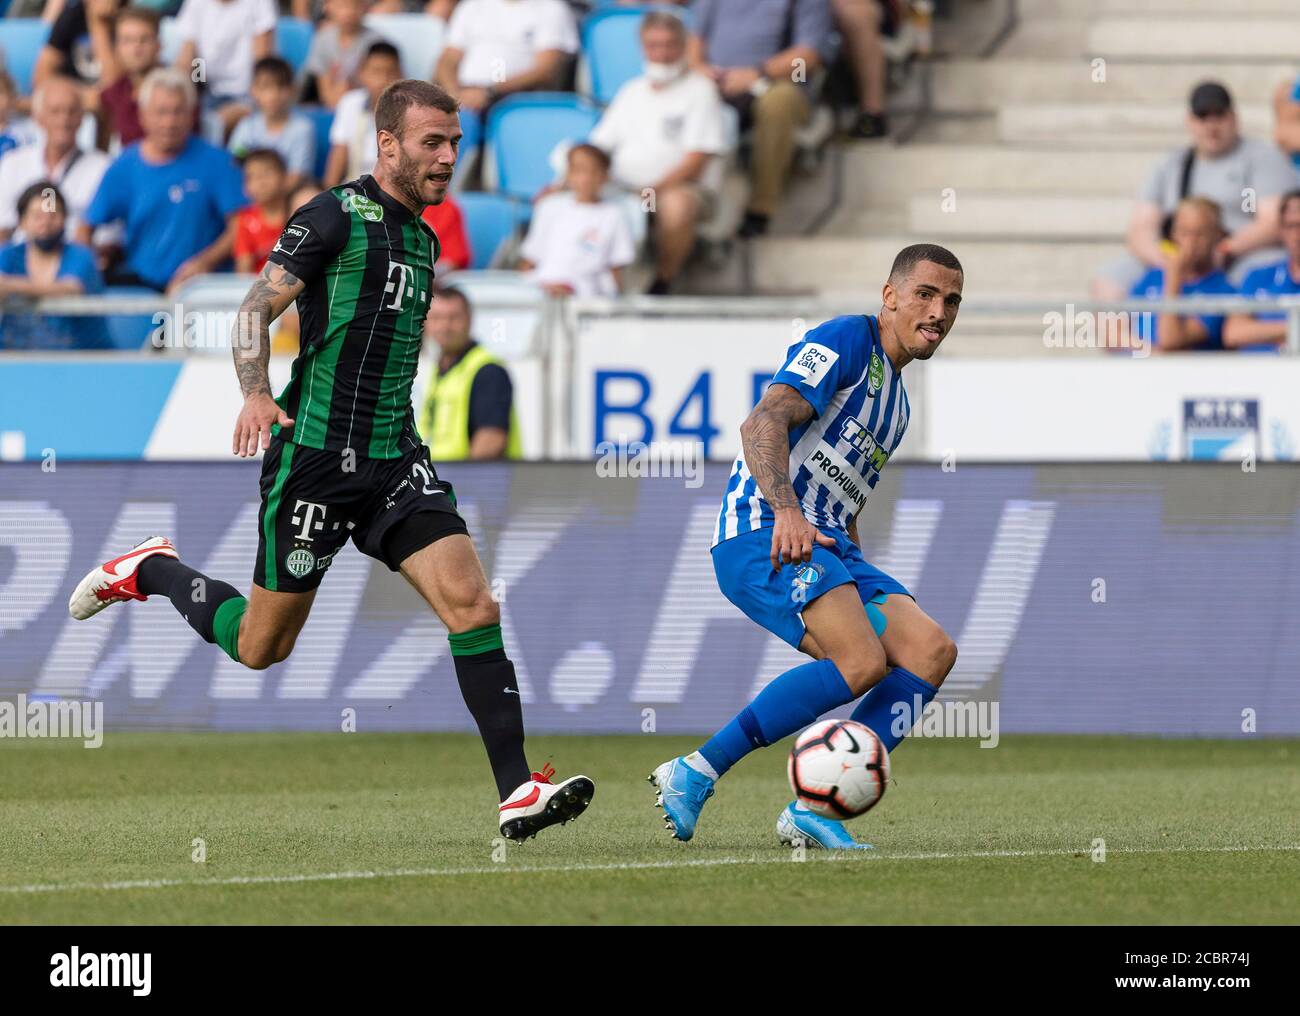 Miha Blazic of Ferencvarosi TC controls the ball during the